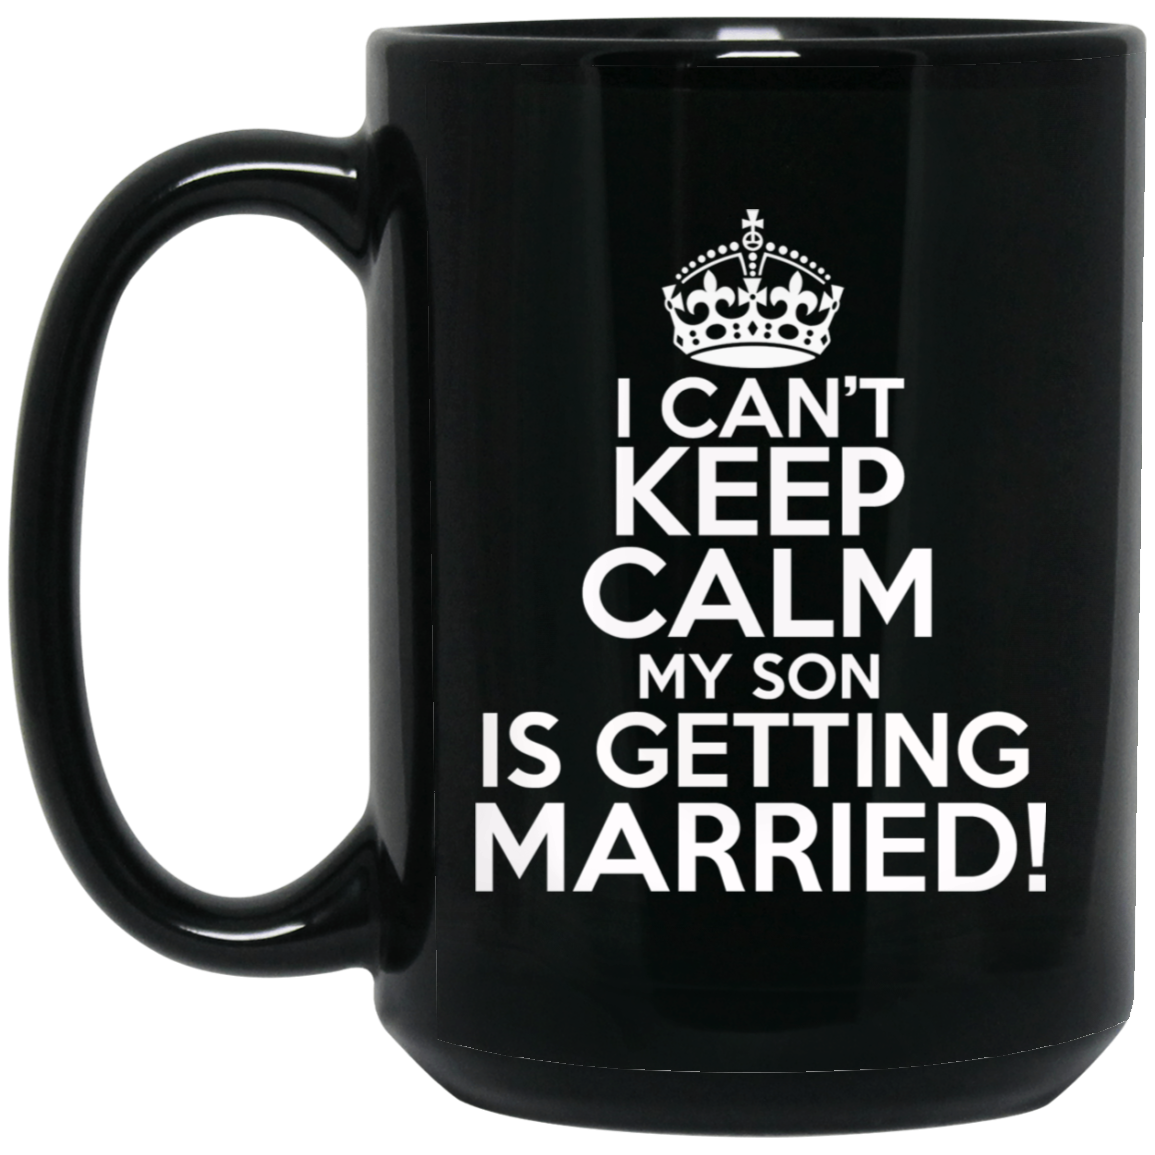 I Can't Keep Calm My Son is Getting Married 15 oz. Black Mug